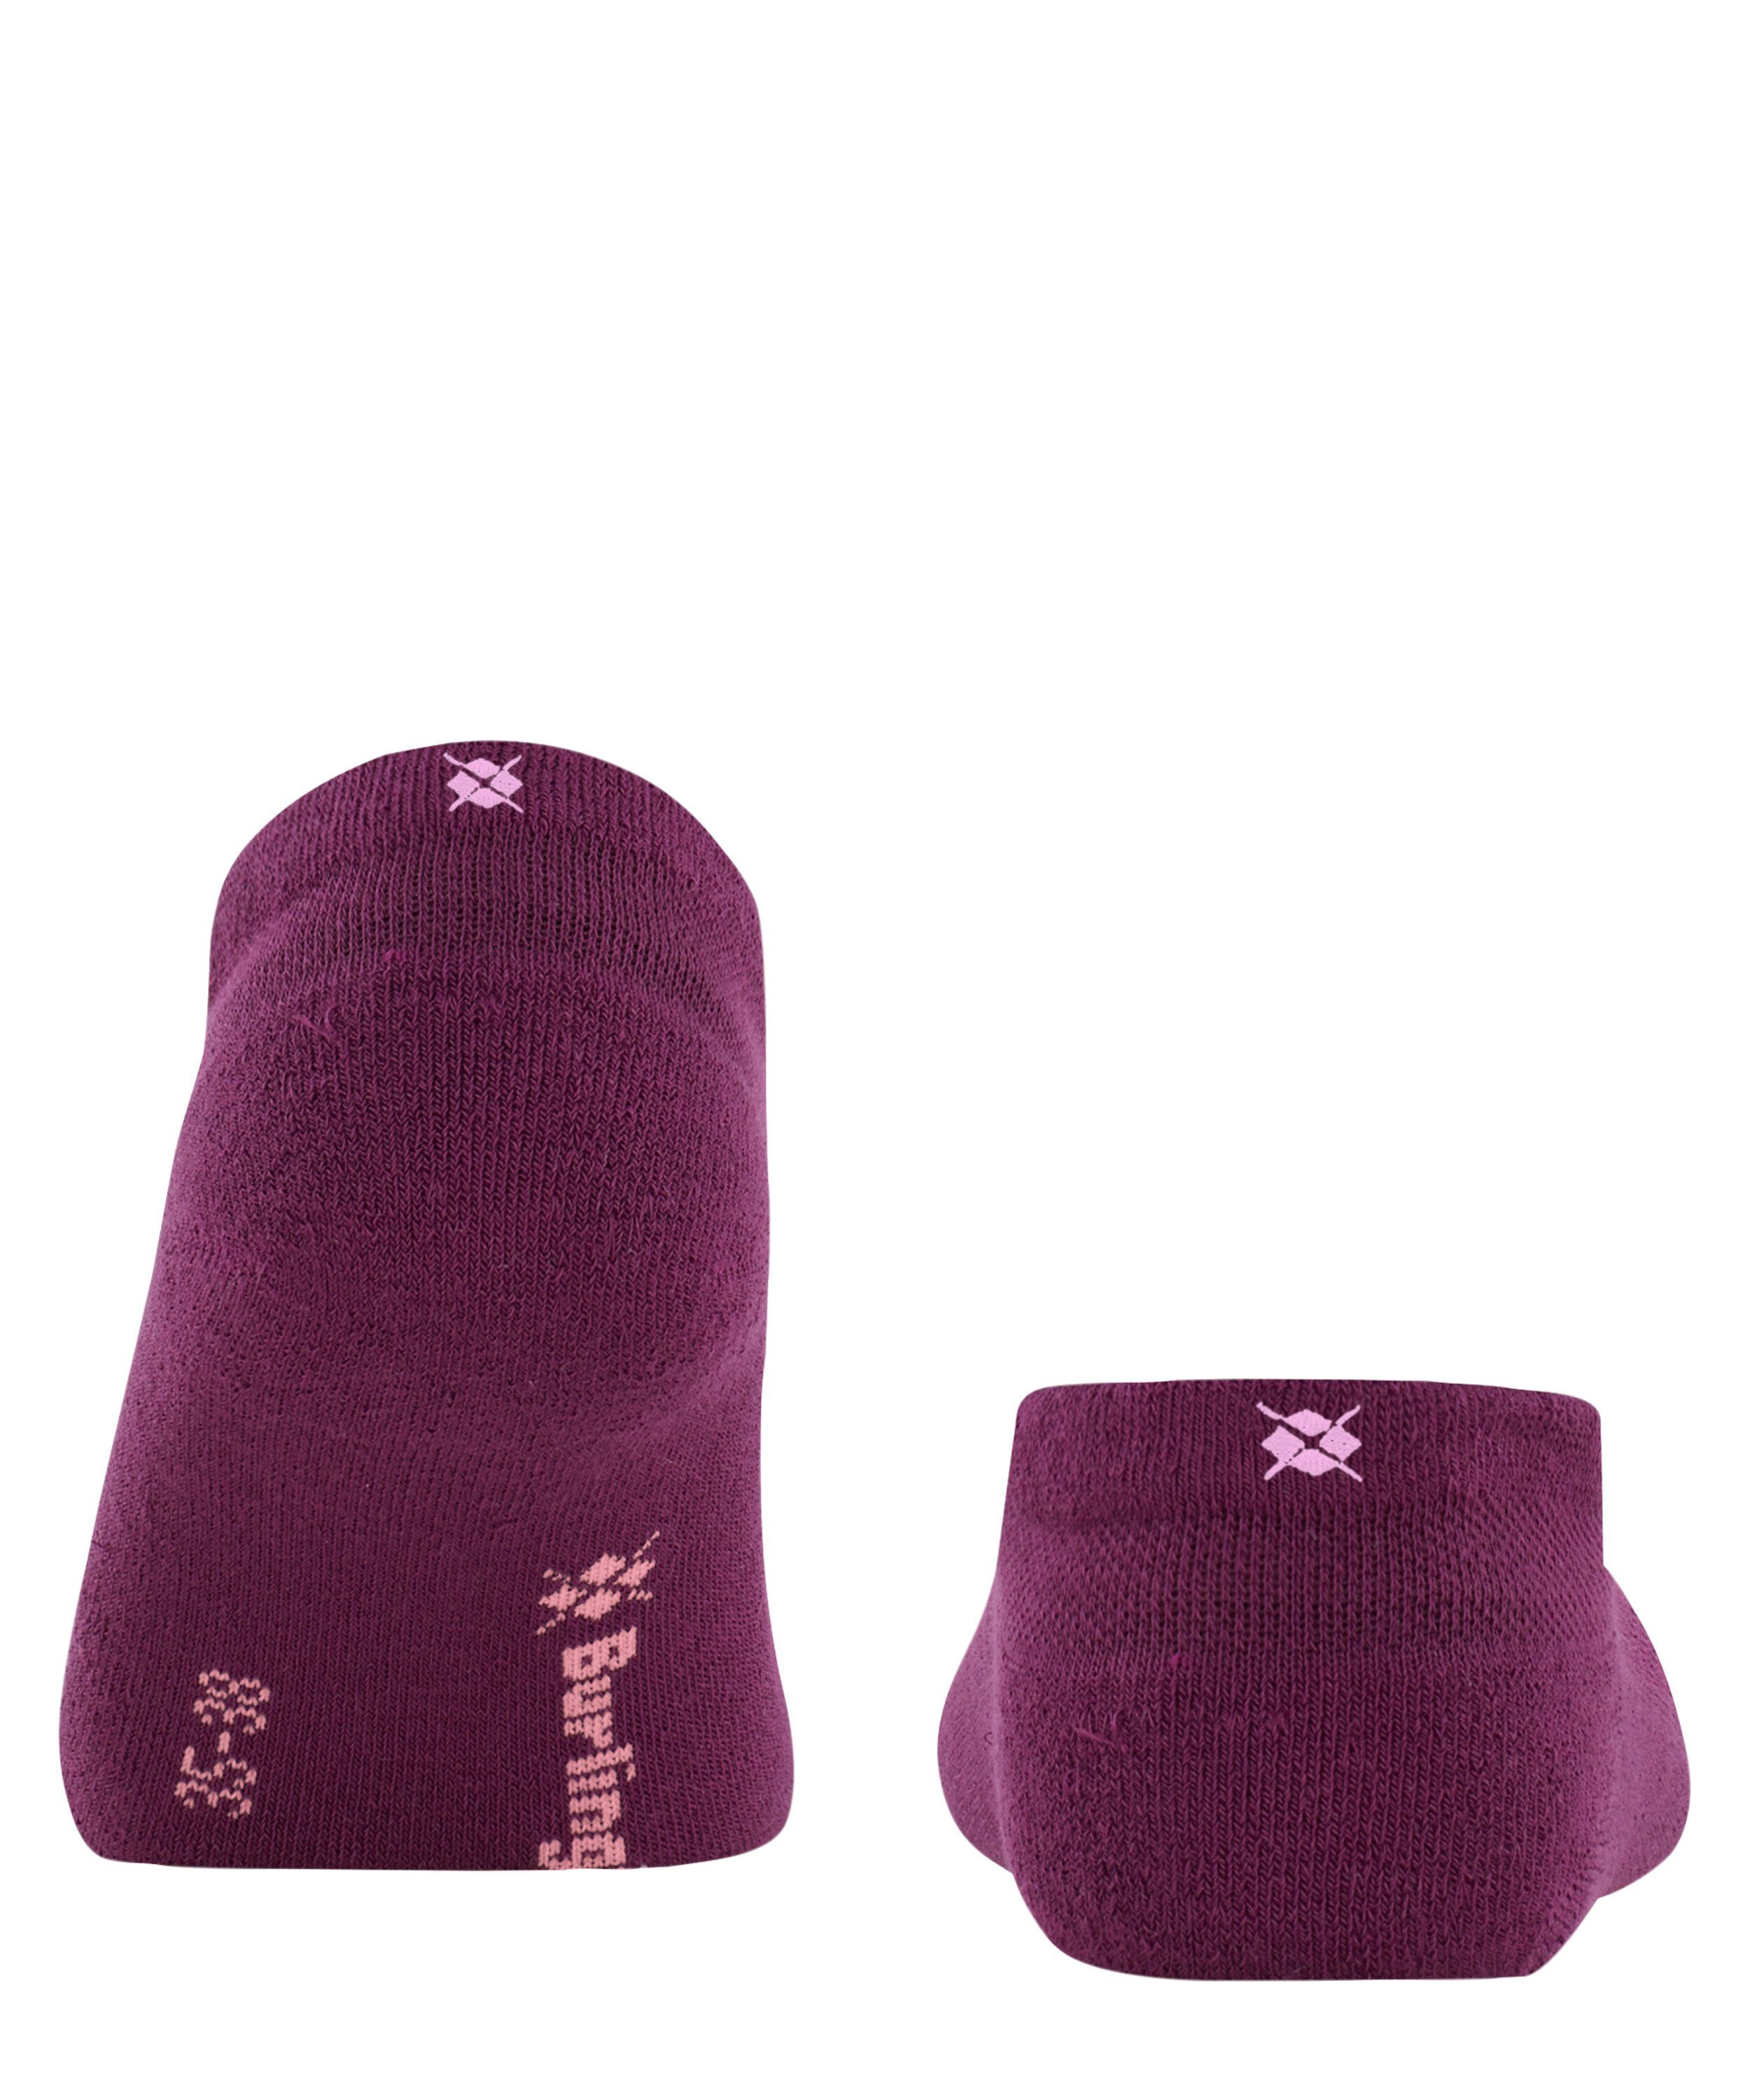 purple Sneakersocken (1-Paar) Athleisure leicht Sohle mit gepolsterter Burlington (8712)